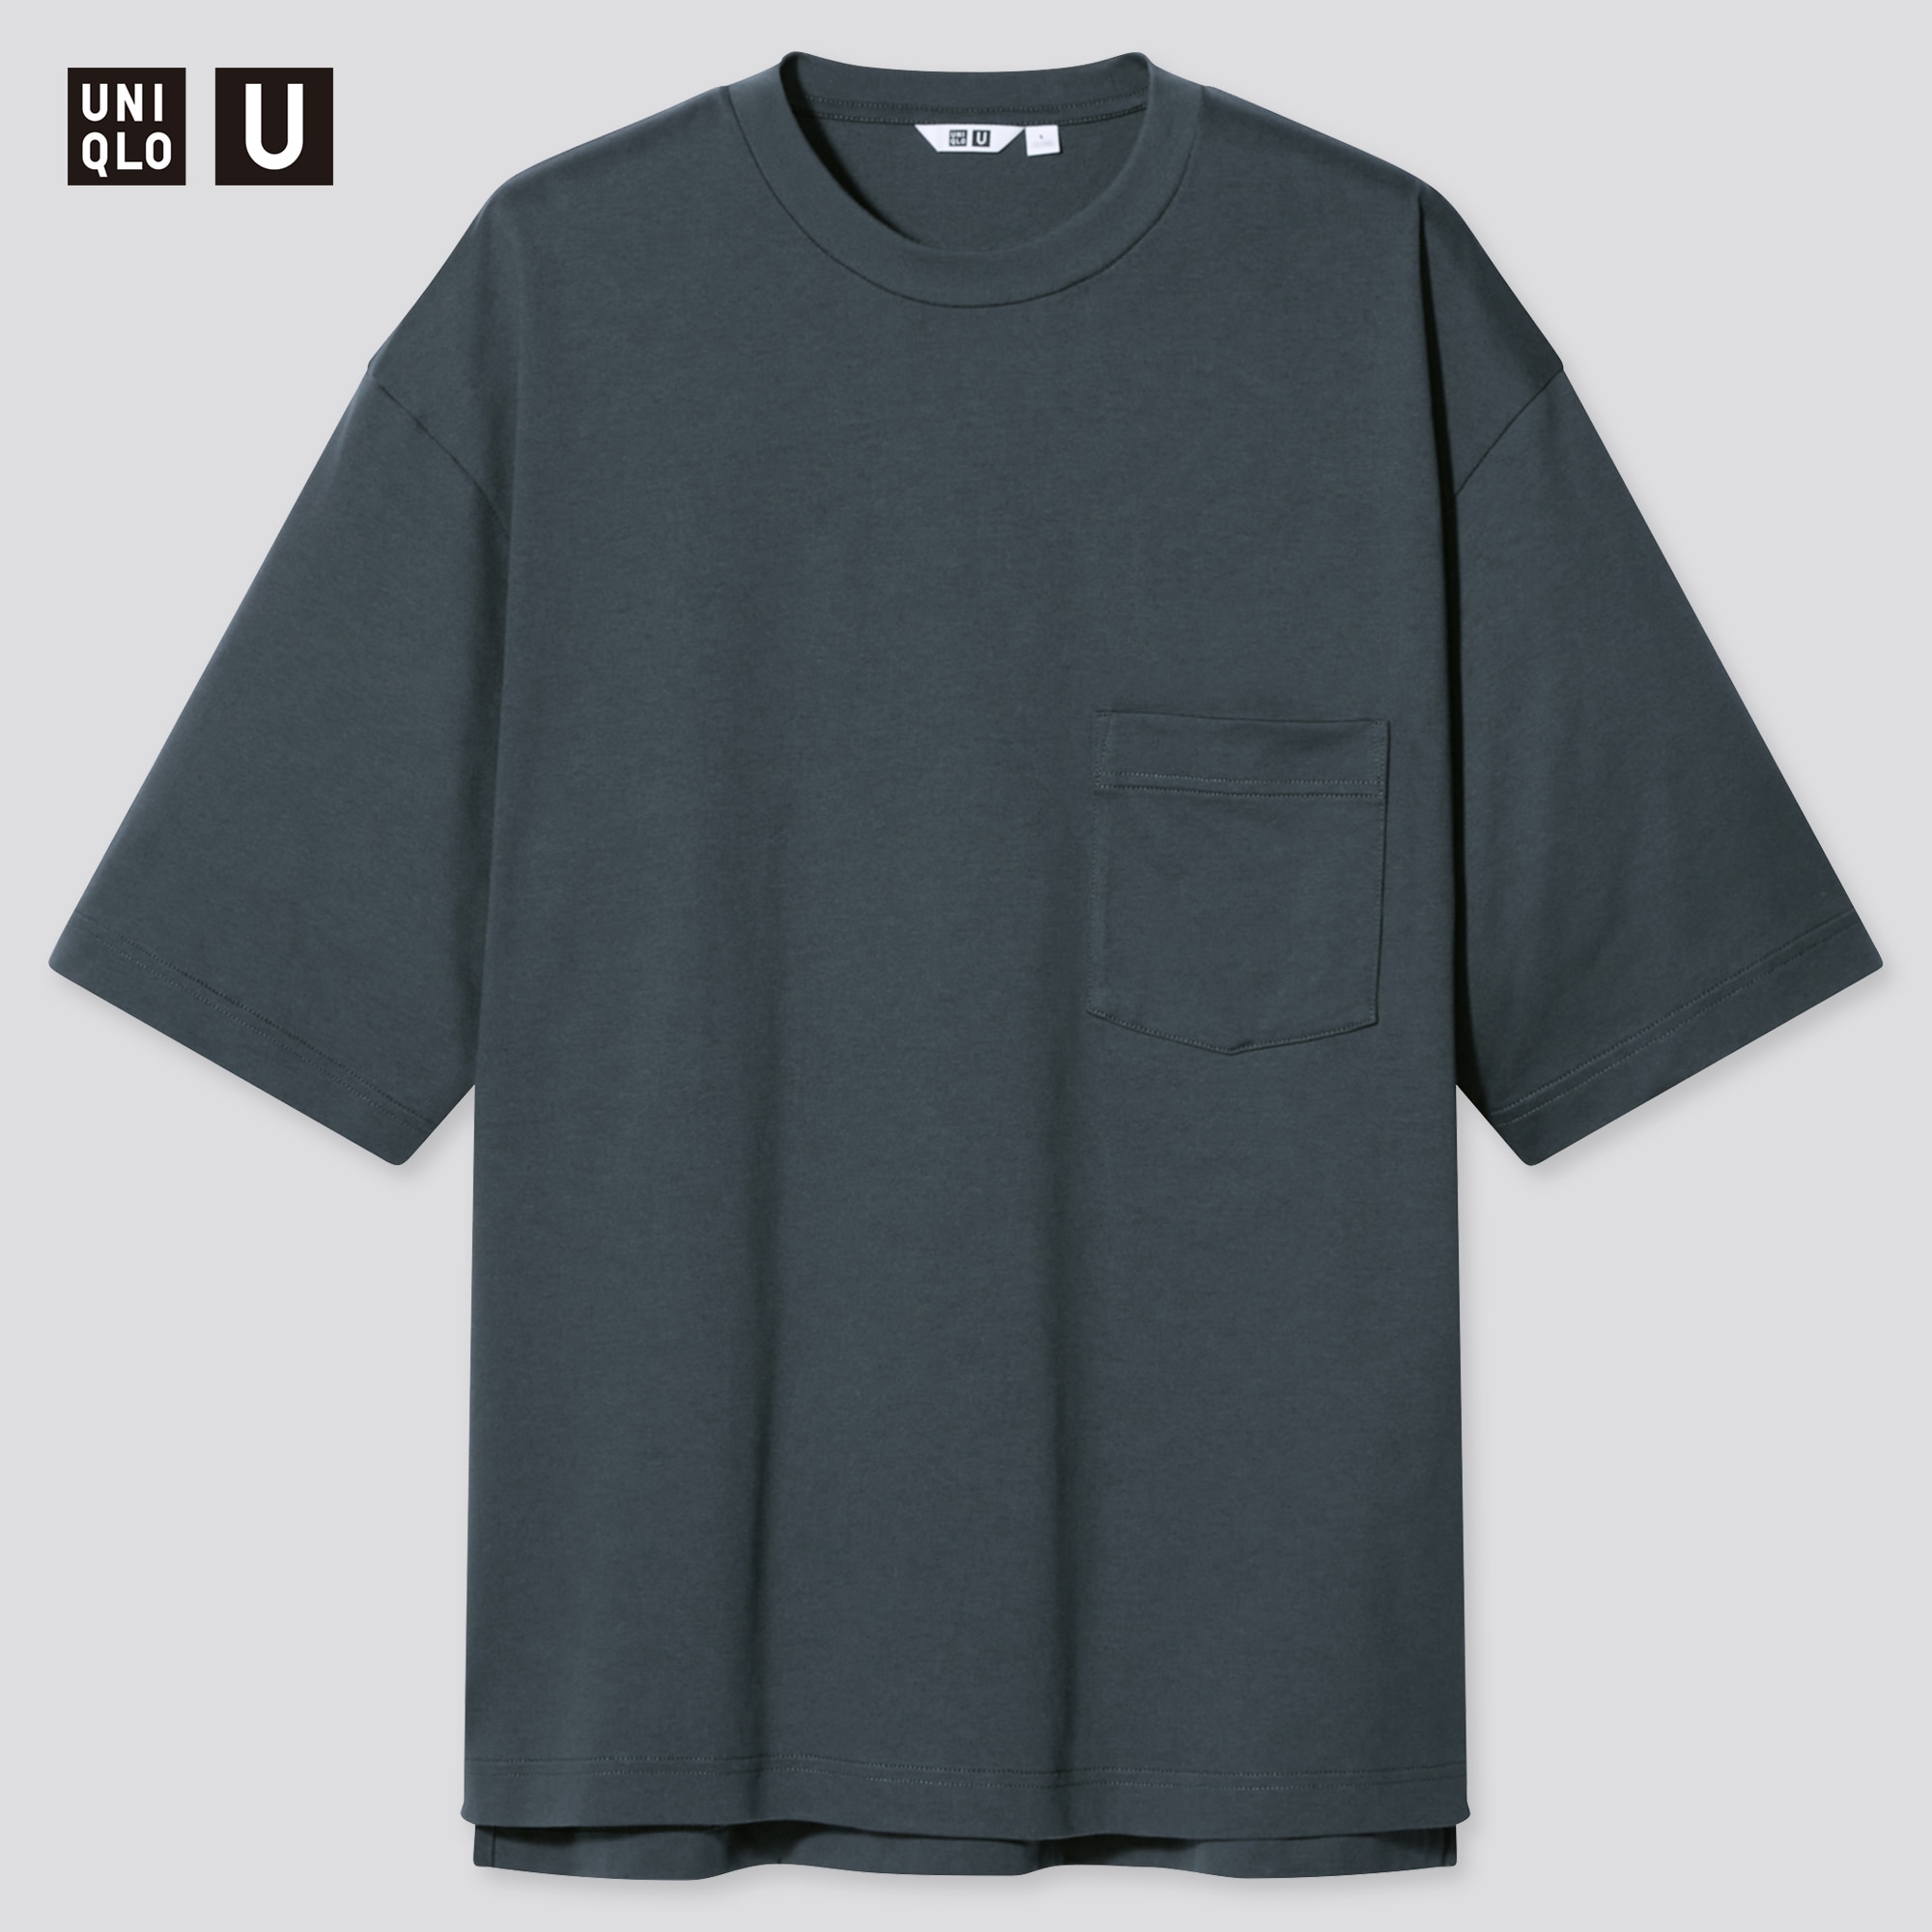 Tシャツ メンズ サイズ関連商品の口コミ 評判 ユニクロ